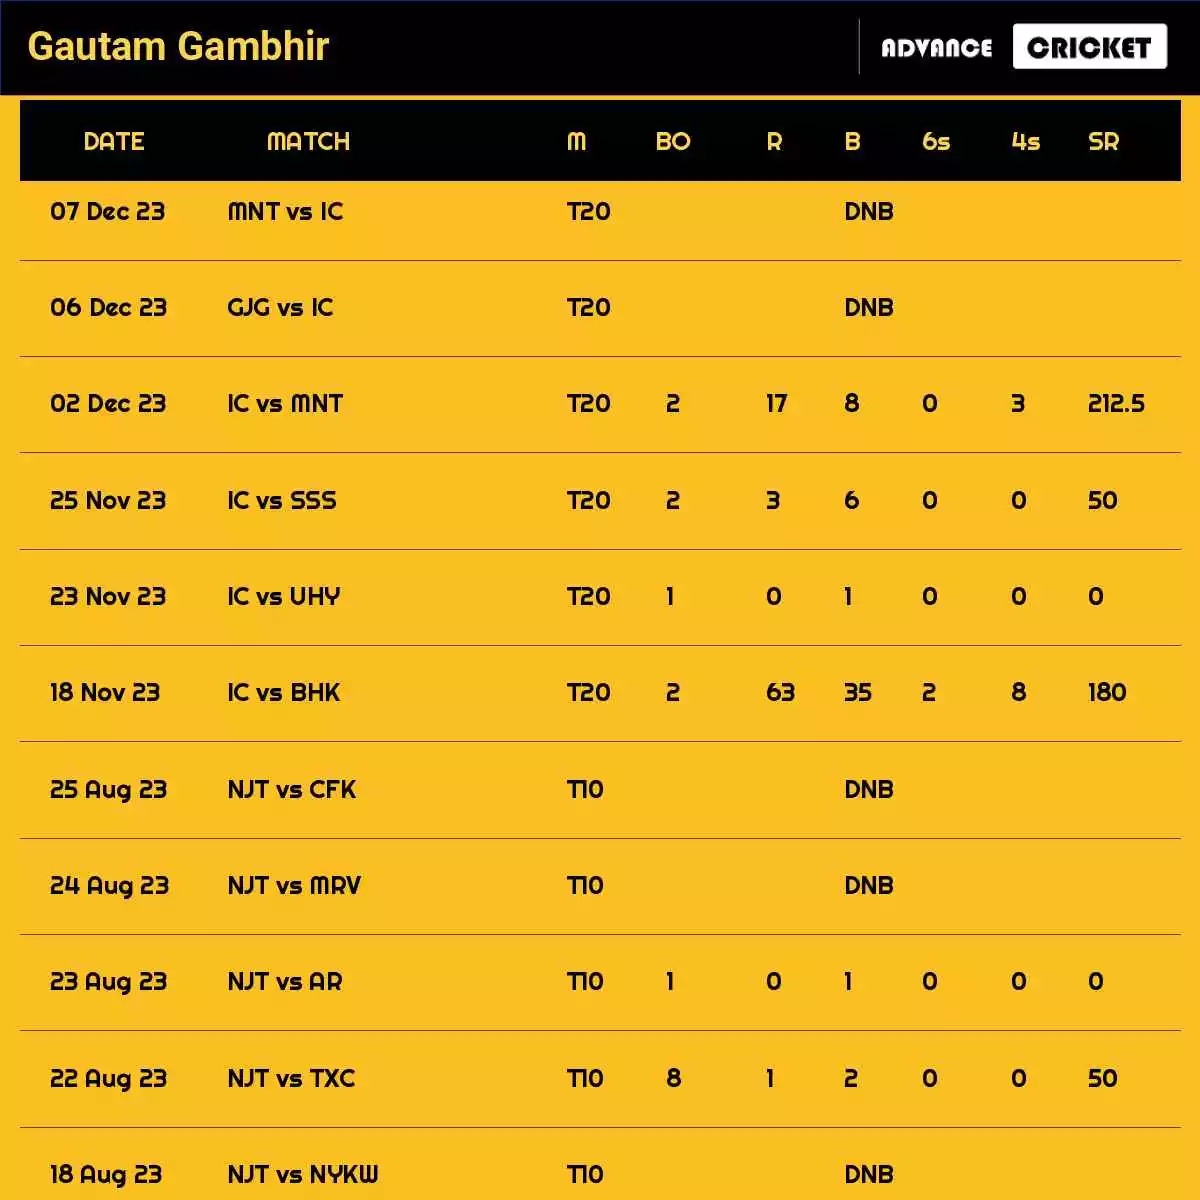 Gautam Gambhir Recent Matches Details Date Wise